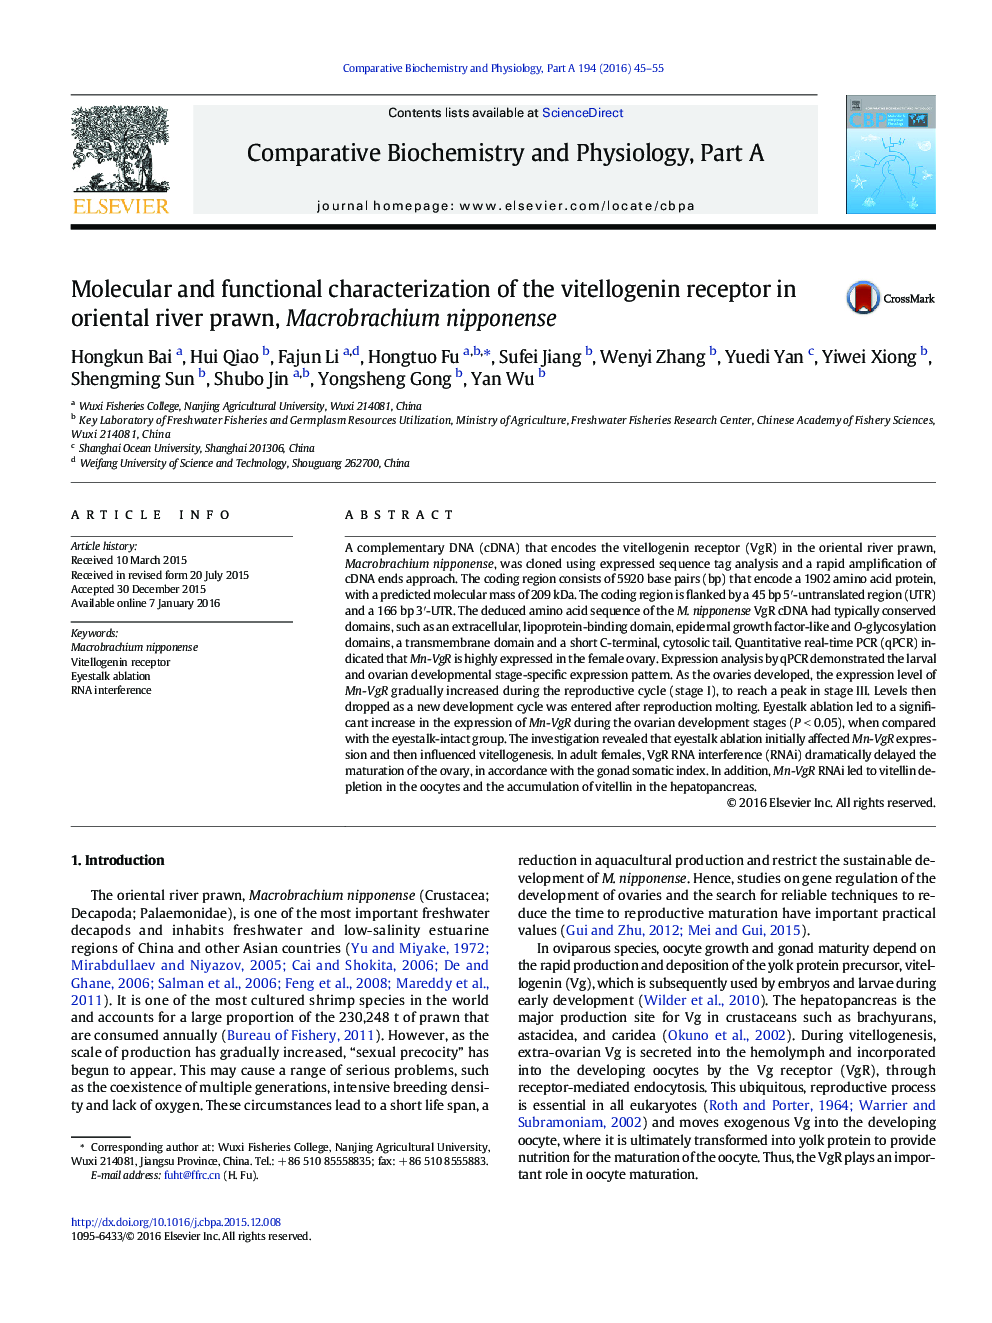 Molecular and functional characterization of the vitellogenin receptor in oriental river prawn, Macrobrachium nipponense